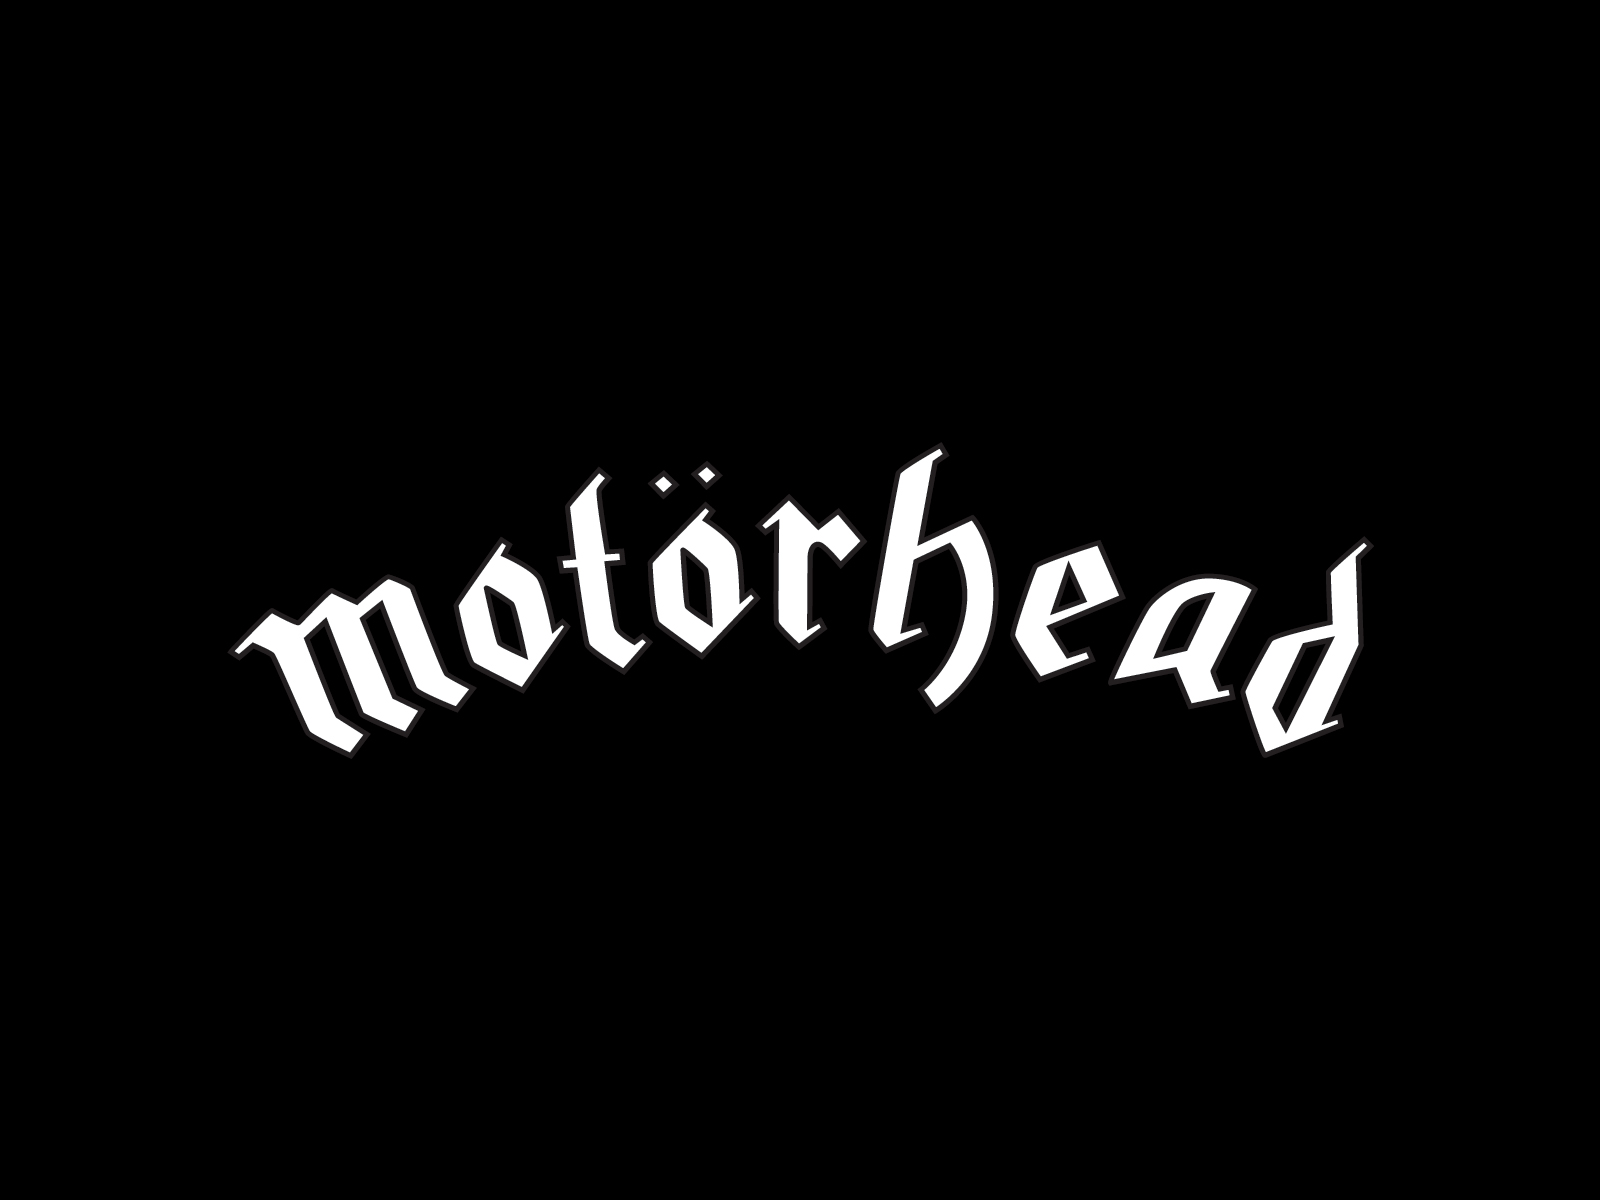  Motörhead HQ Background Images